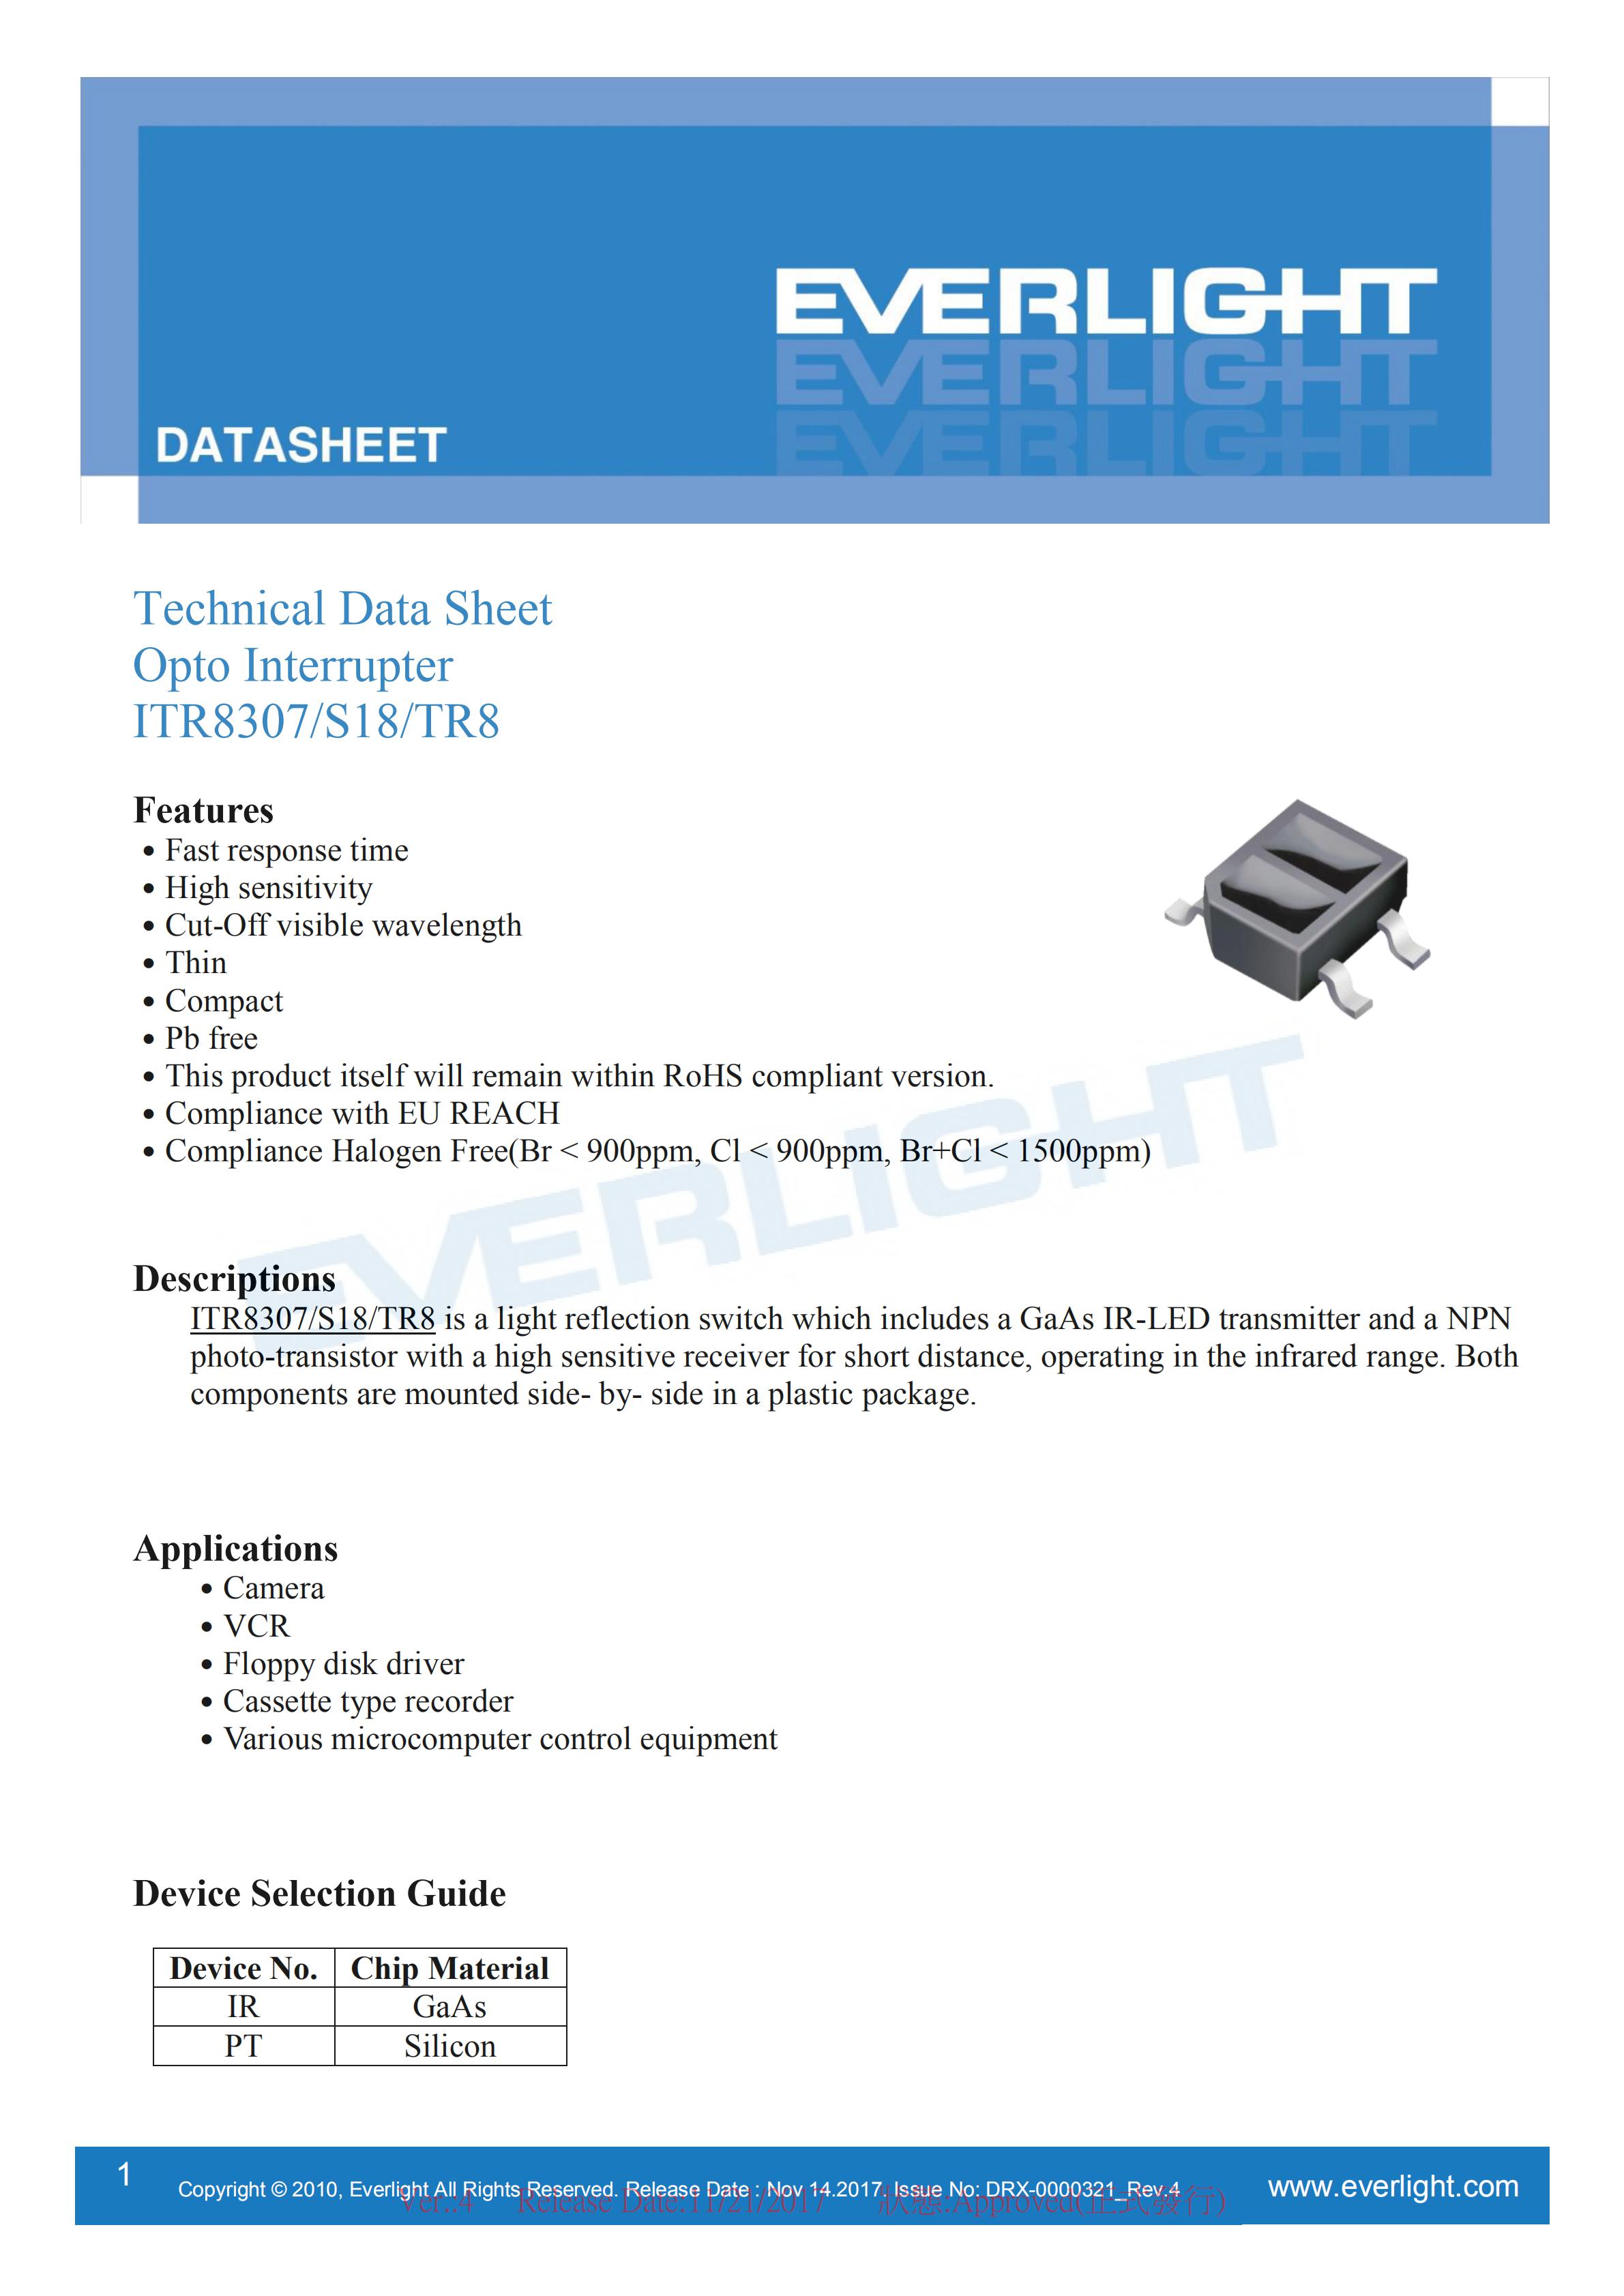 EVERLIGHT Optical Switch ITR8307-S18/TR8 Opto Interrupter Datasheet